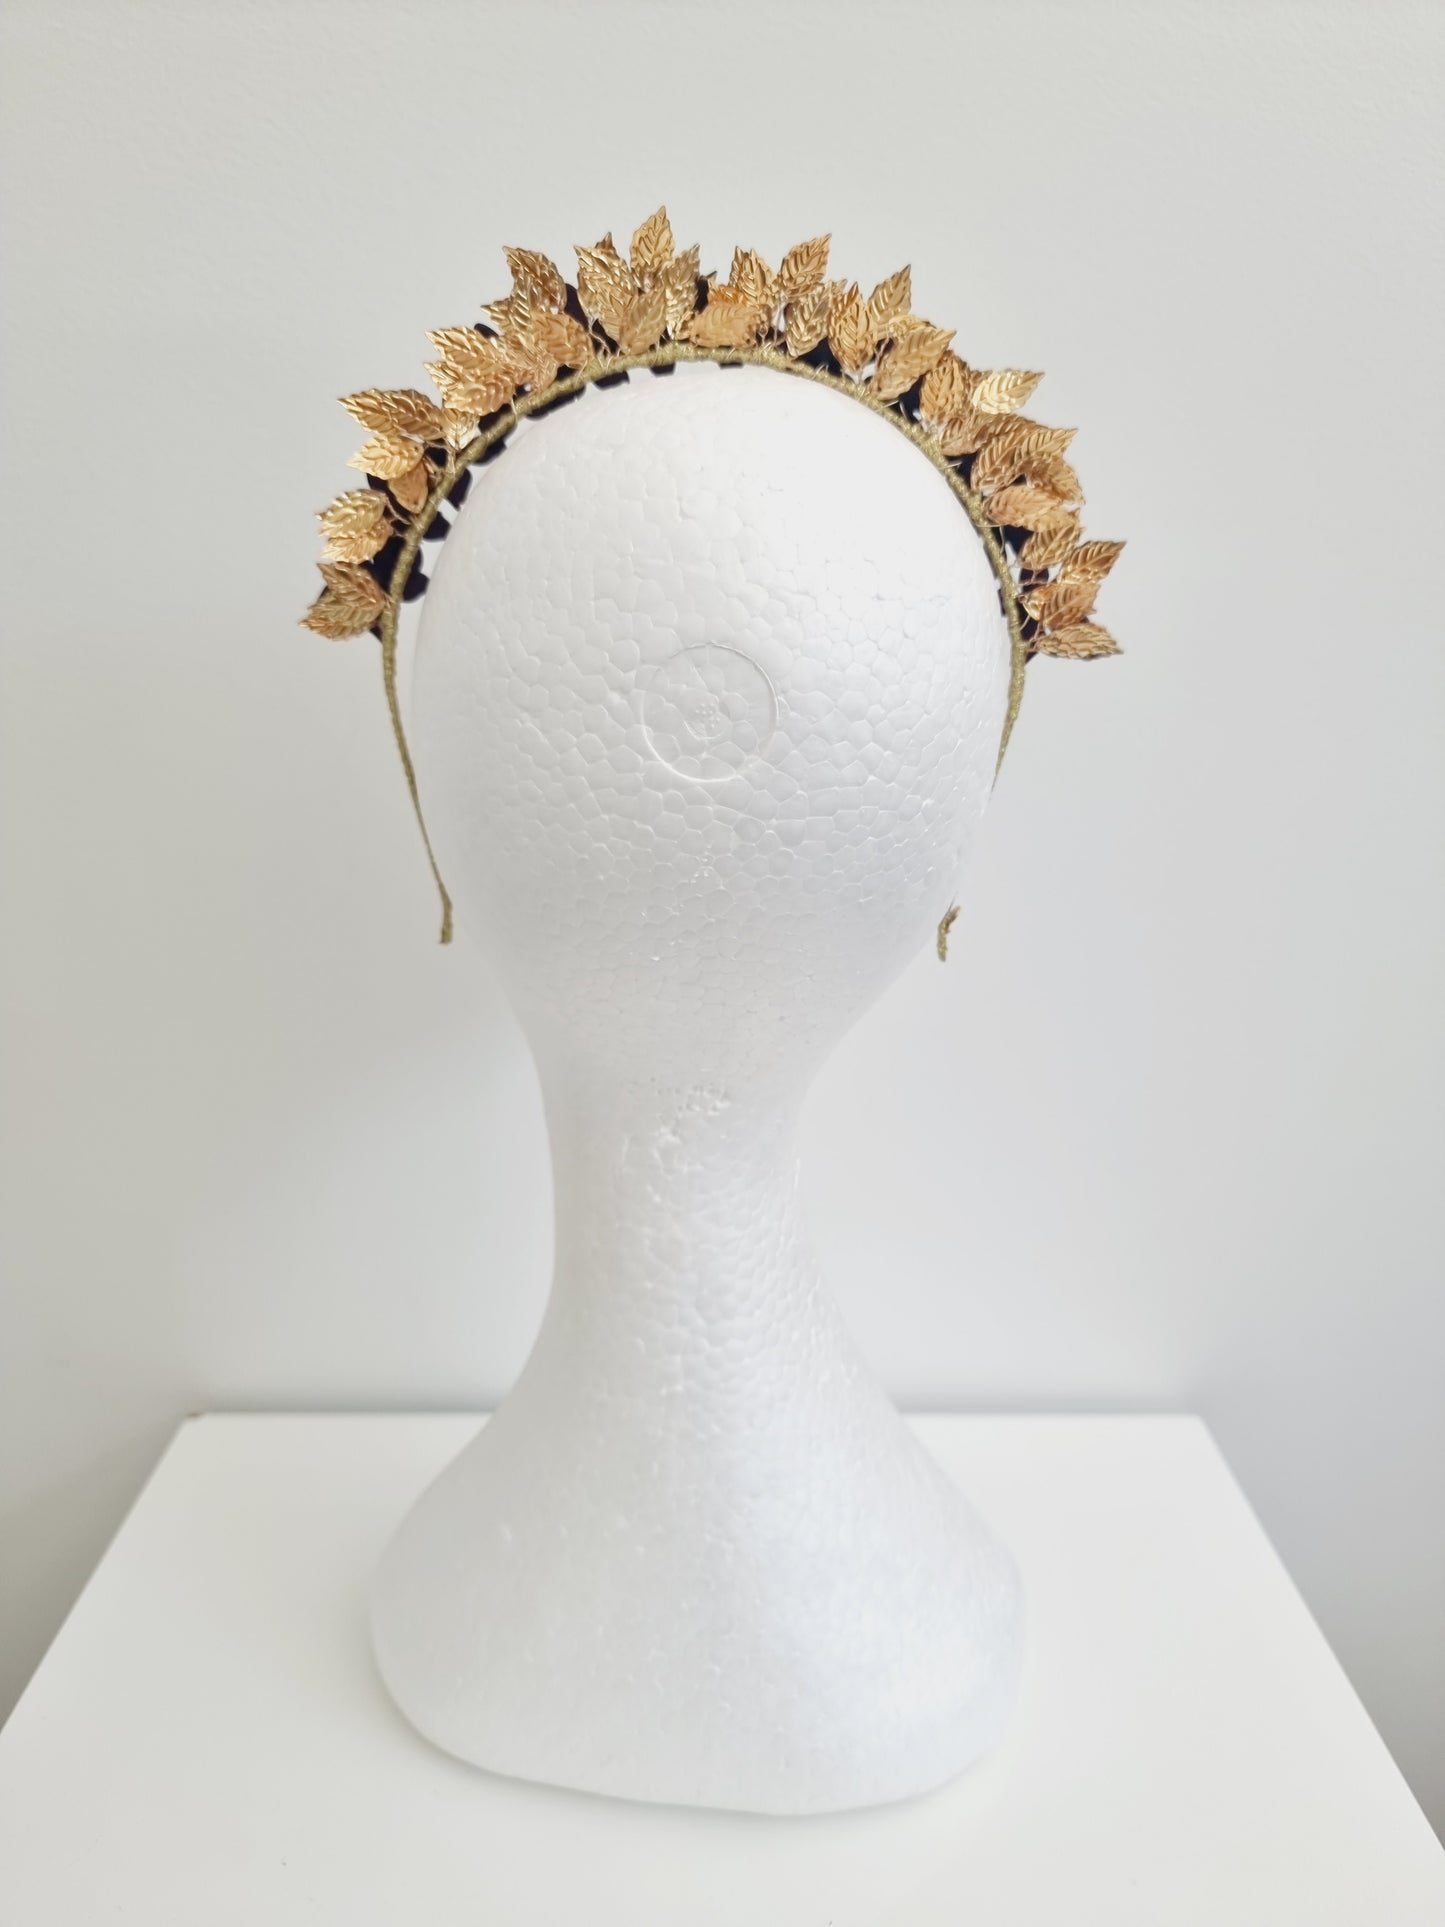 Miss Freya. Womens embellished flower headband fascinator in Black /gold